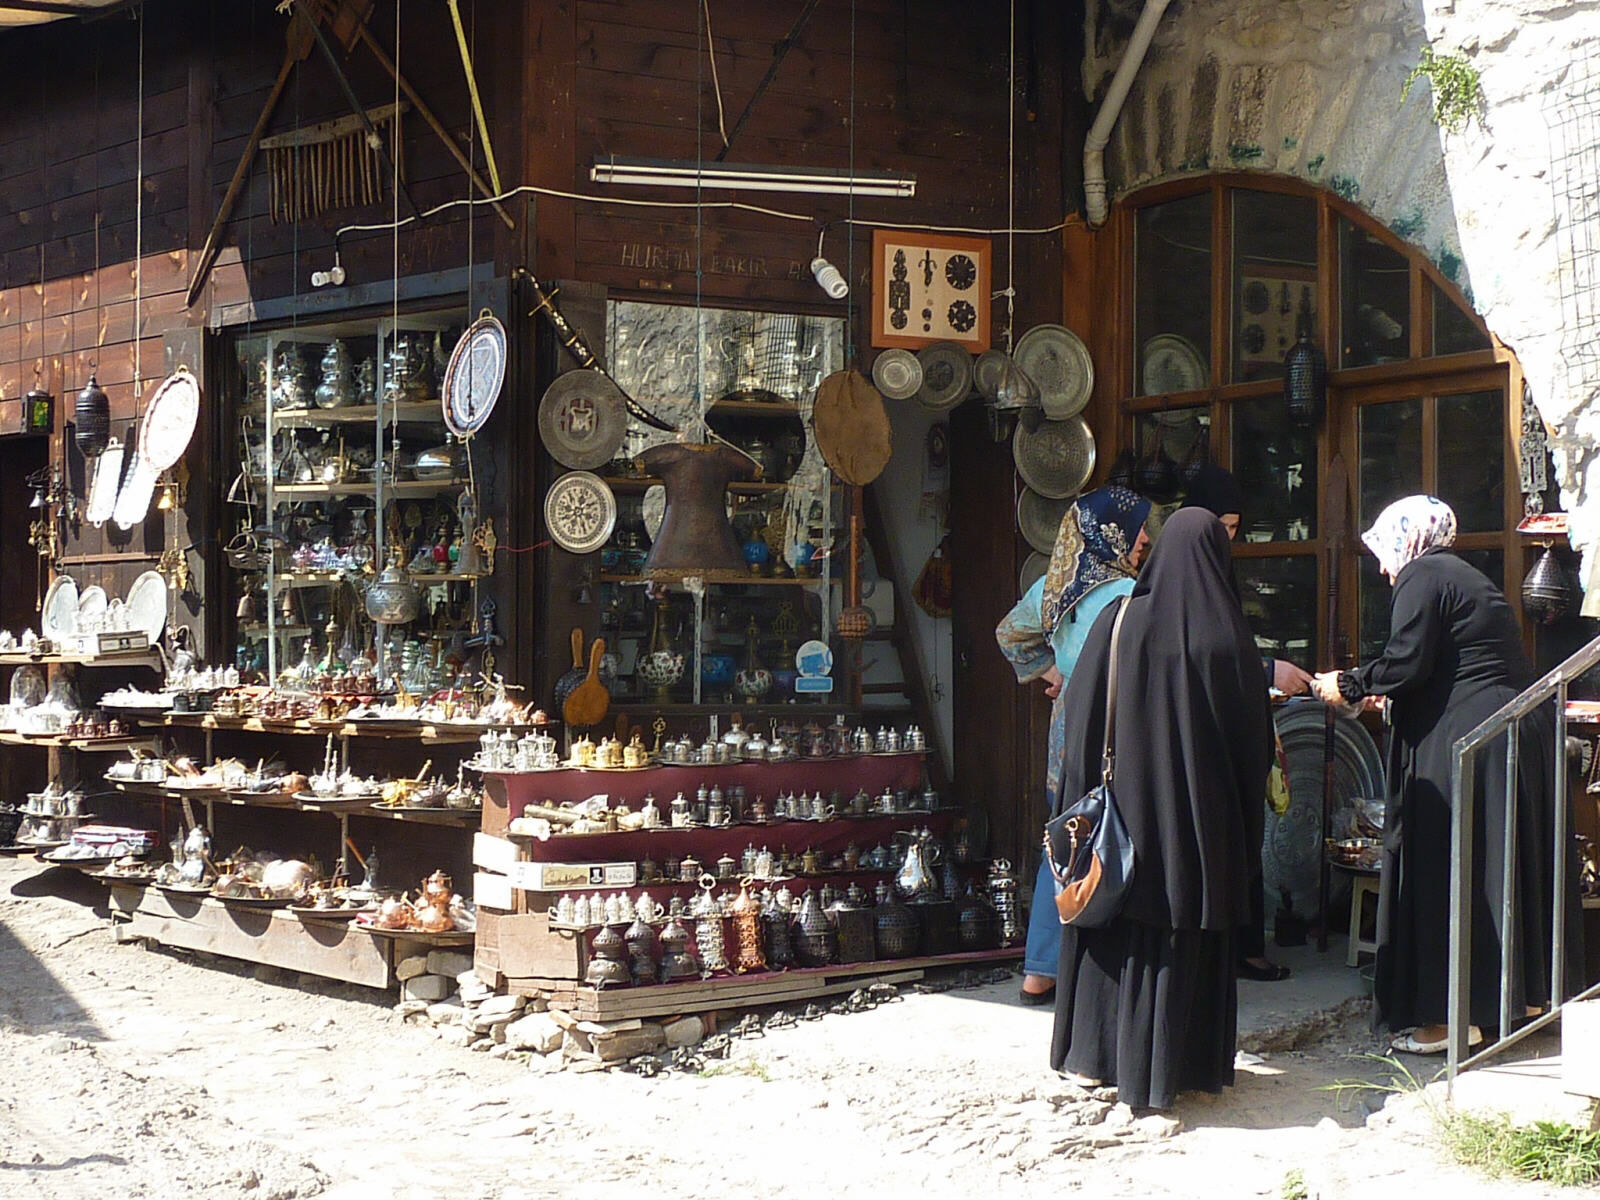 The blacksmiths' bazaar in Safranbolu, Turkey